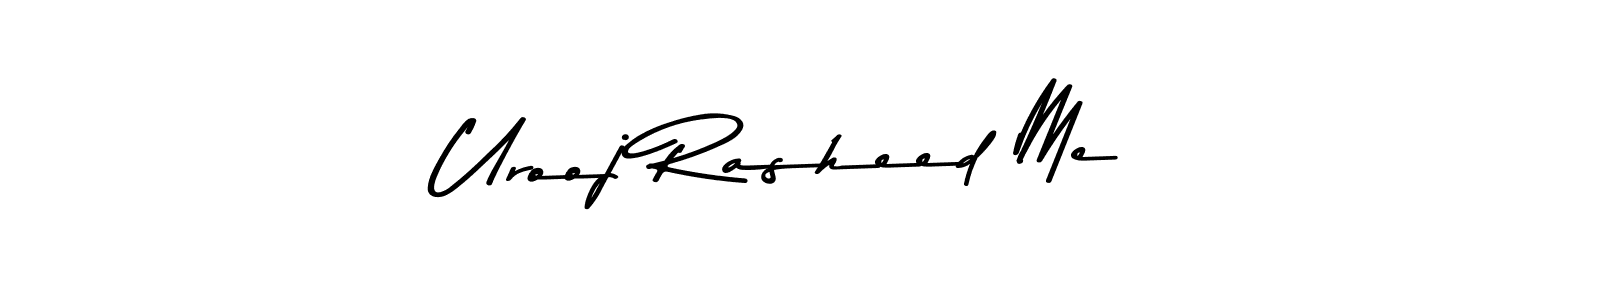 Make a beautiful signature design for name Urooj Rasheed Me. Use this online signature maker to create a handwritten signature for free. Urooj Rasheed Me signature style 9 images and pictures png